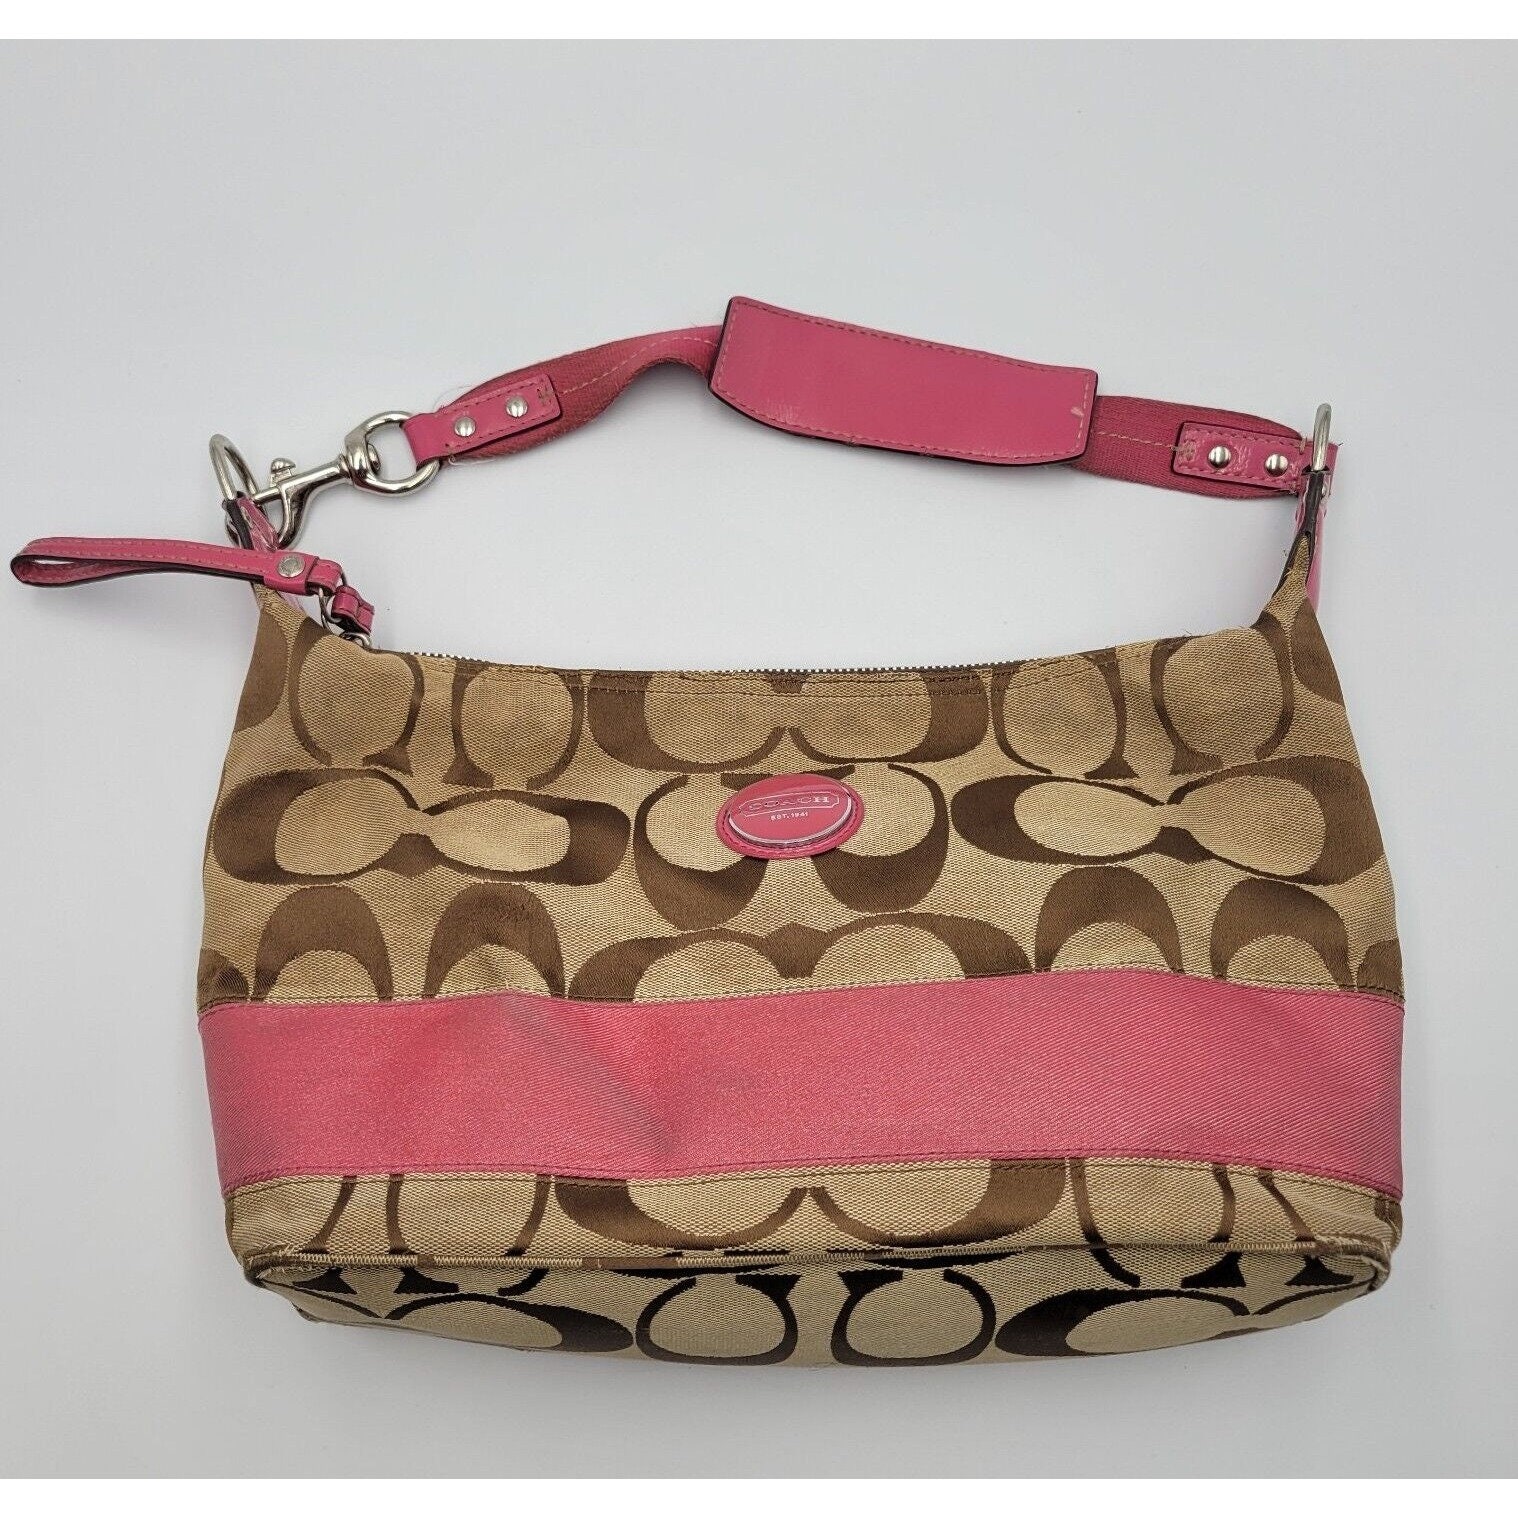 Y2K Hot Pink Coach Bag  Bags, Hot pink bag, Coach bags